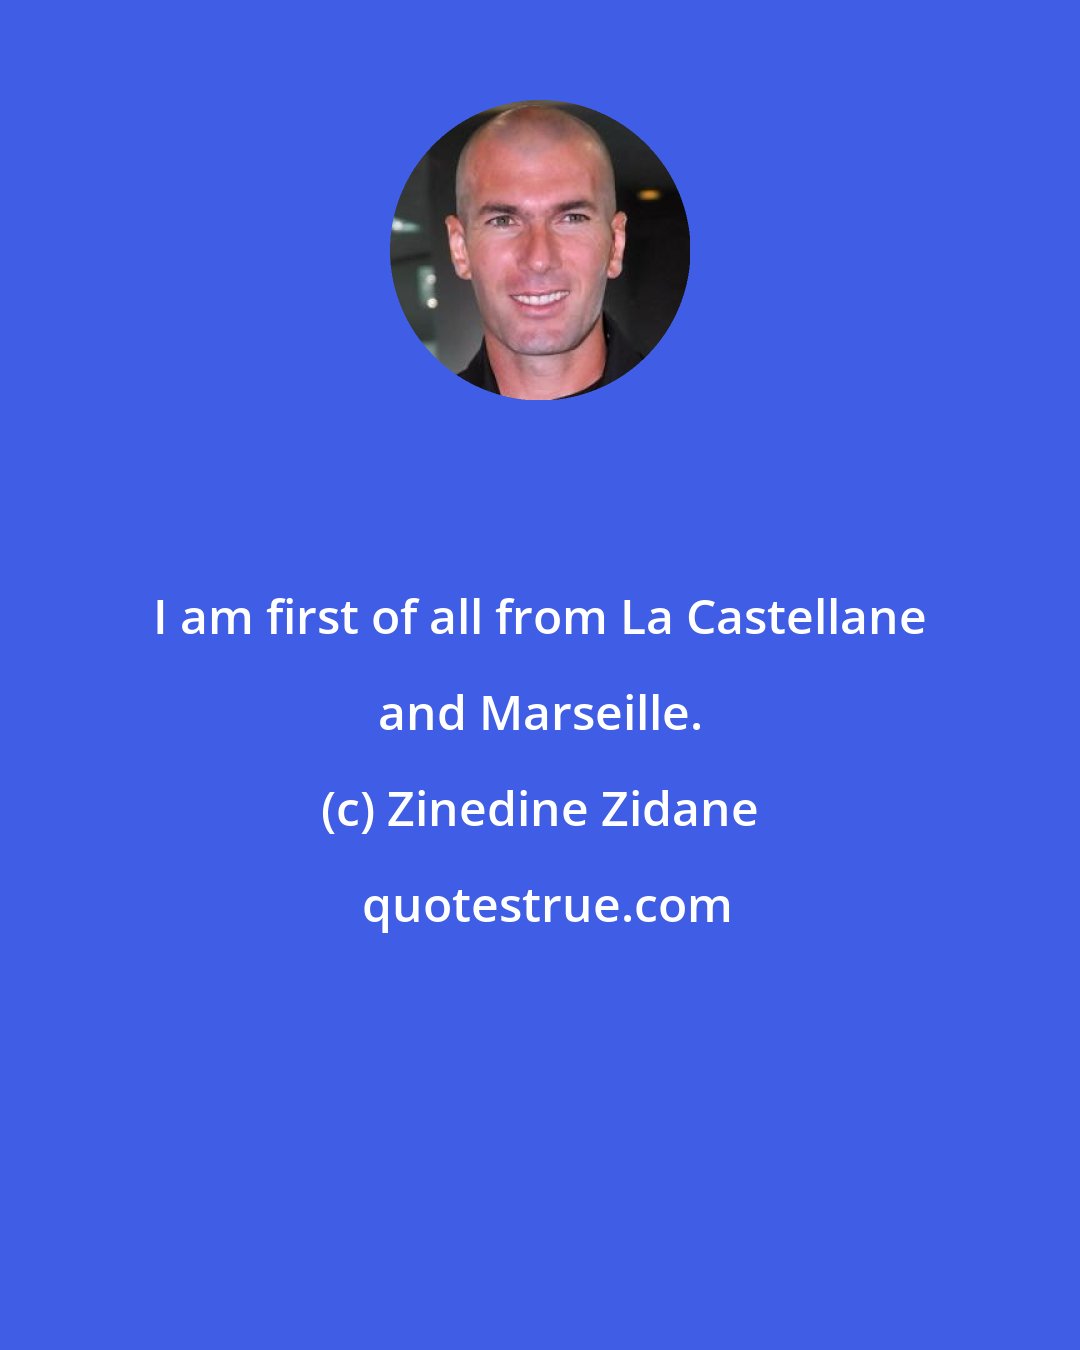 Zinedine Zidane: I am first of all from La Castellane and Marseille.